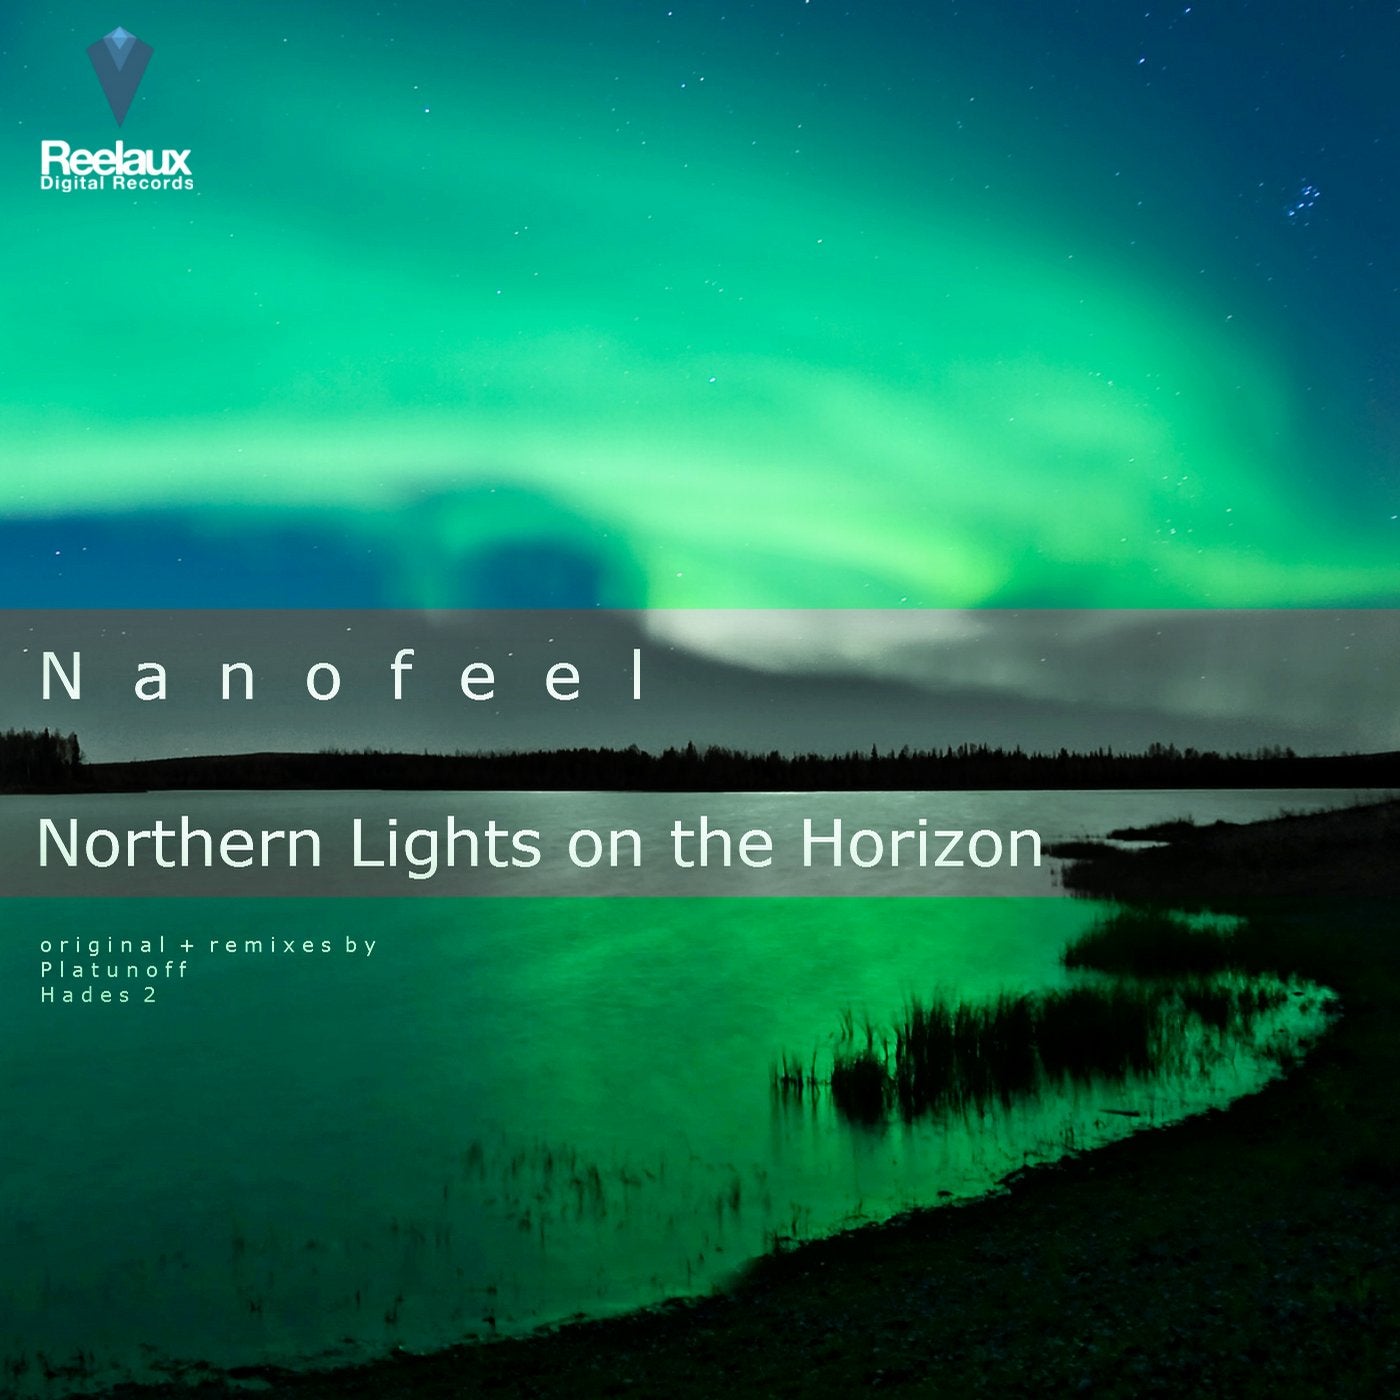 Northern Lights on the Horizon